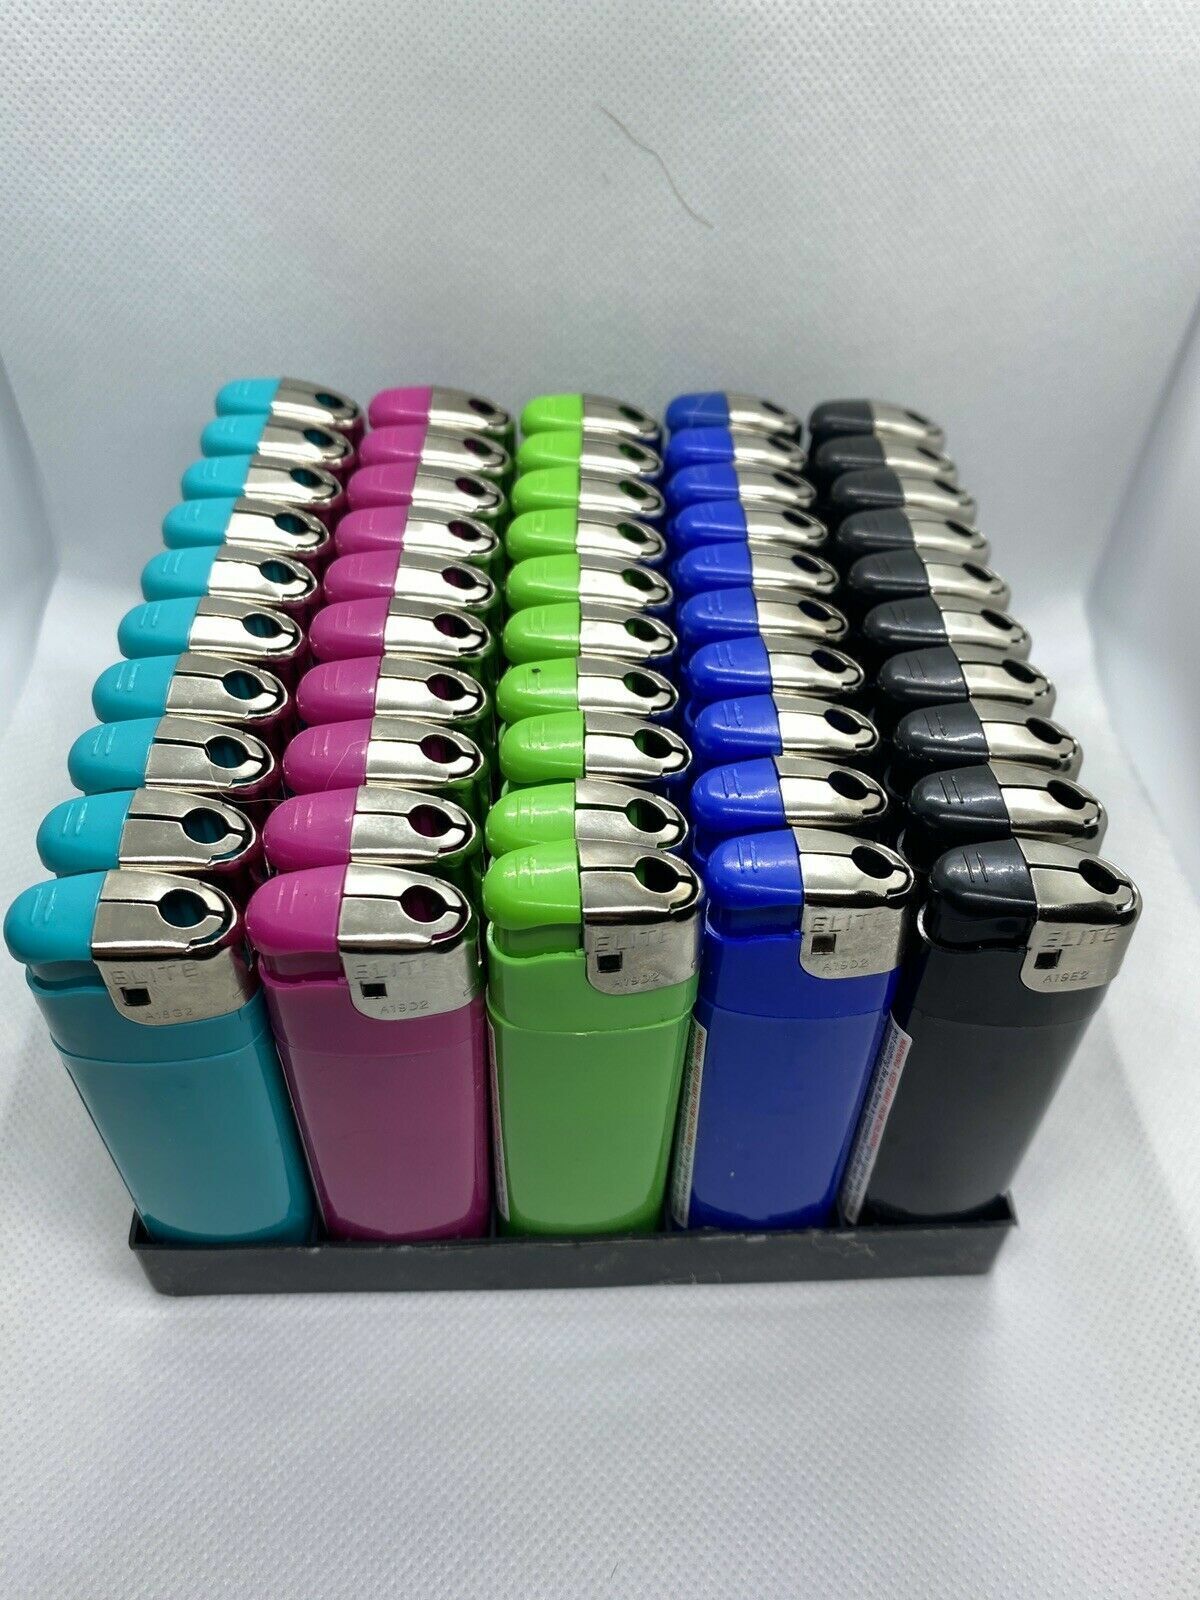 250 Multicolor Disposable Lighters - Bulk Lot - Child Proof - 